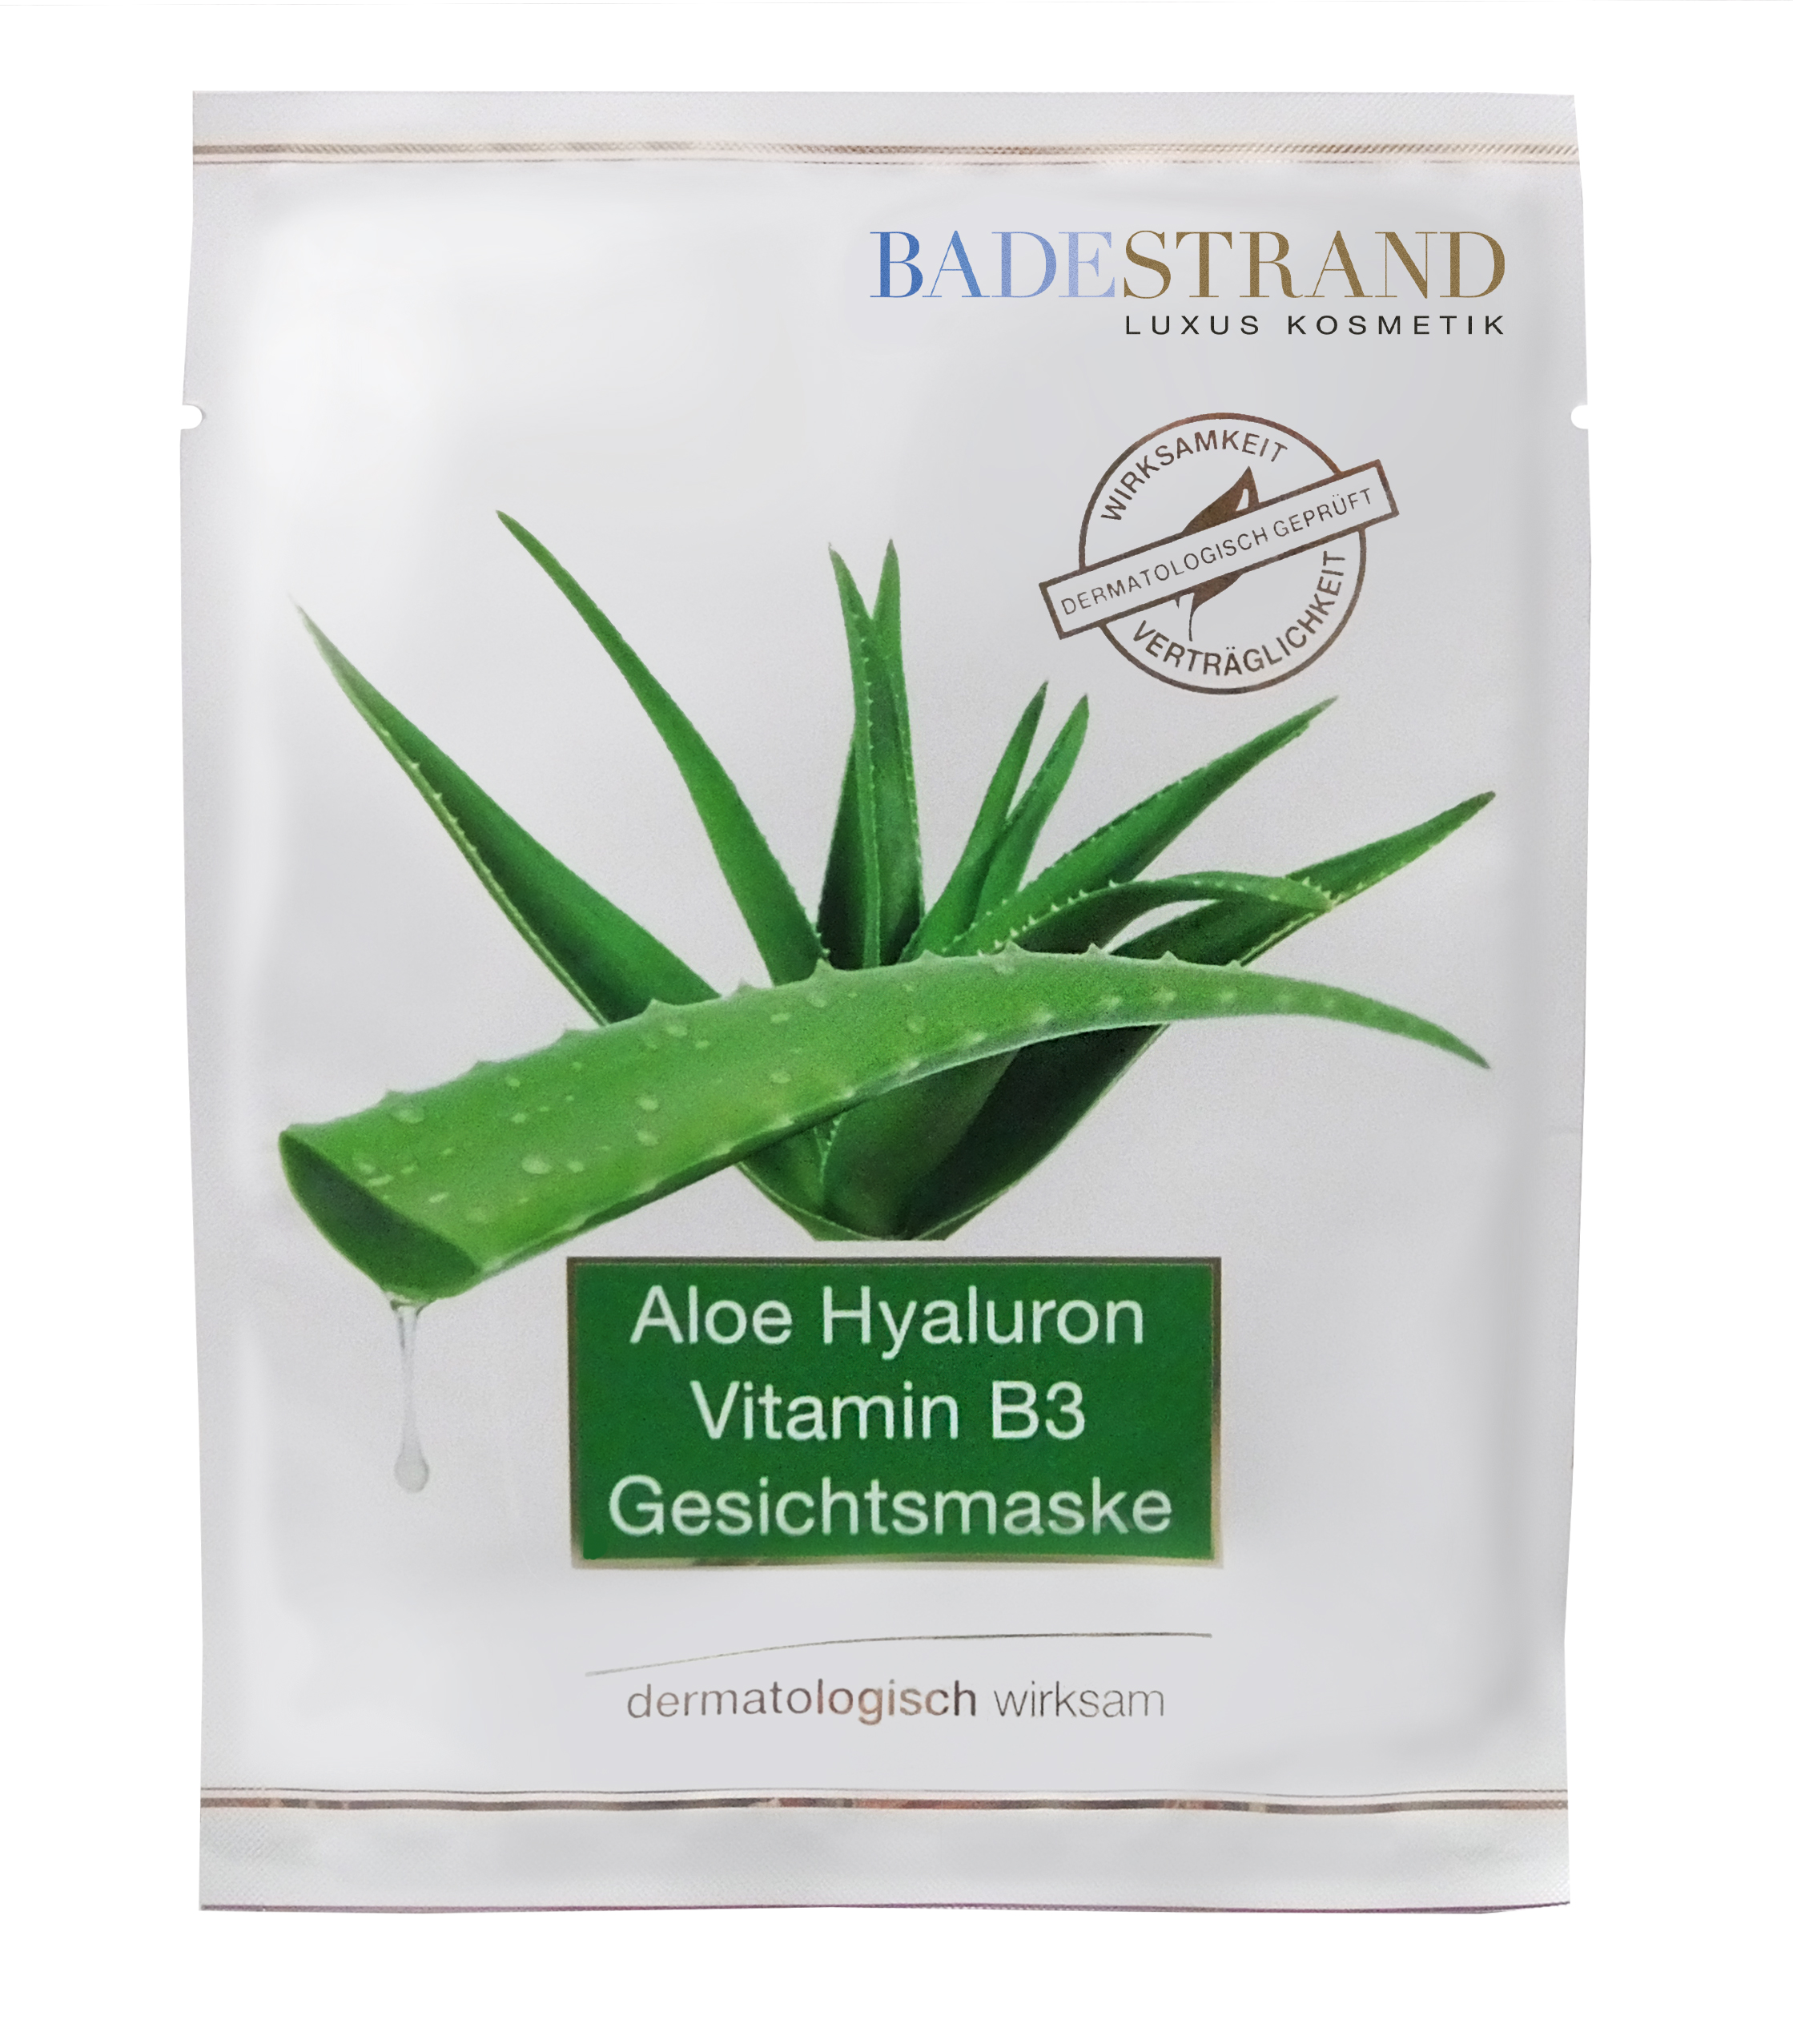 Aloe Hyaluron Vitamin B3 Gesichtsmaske